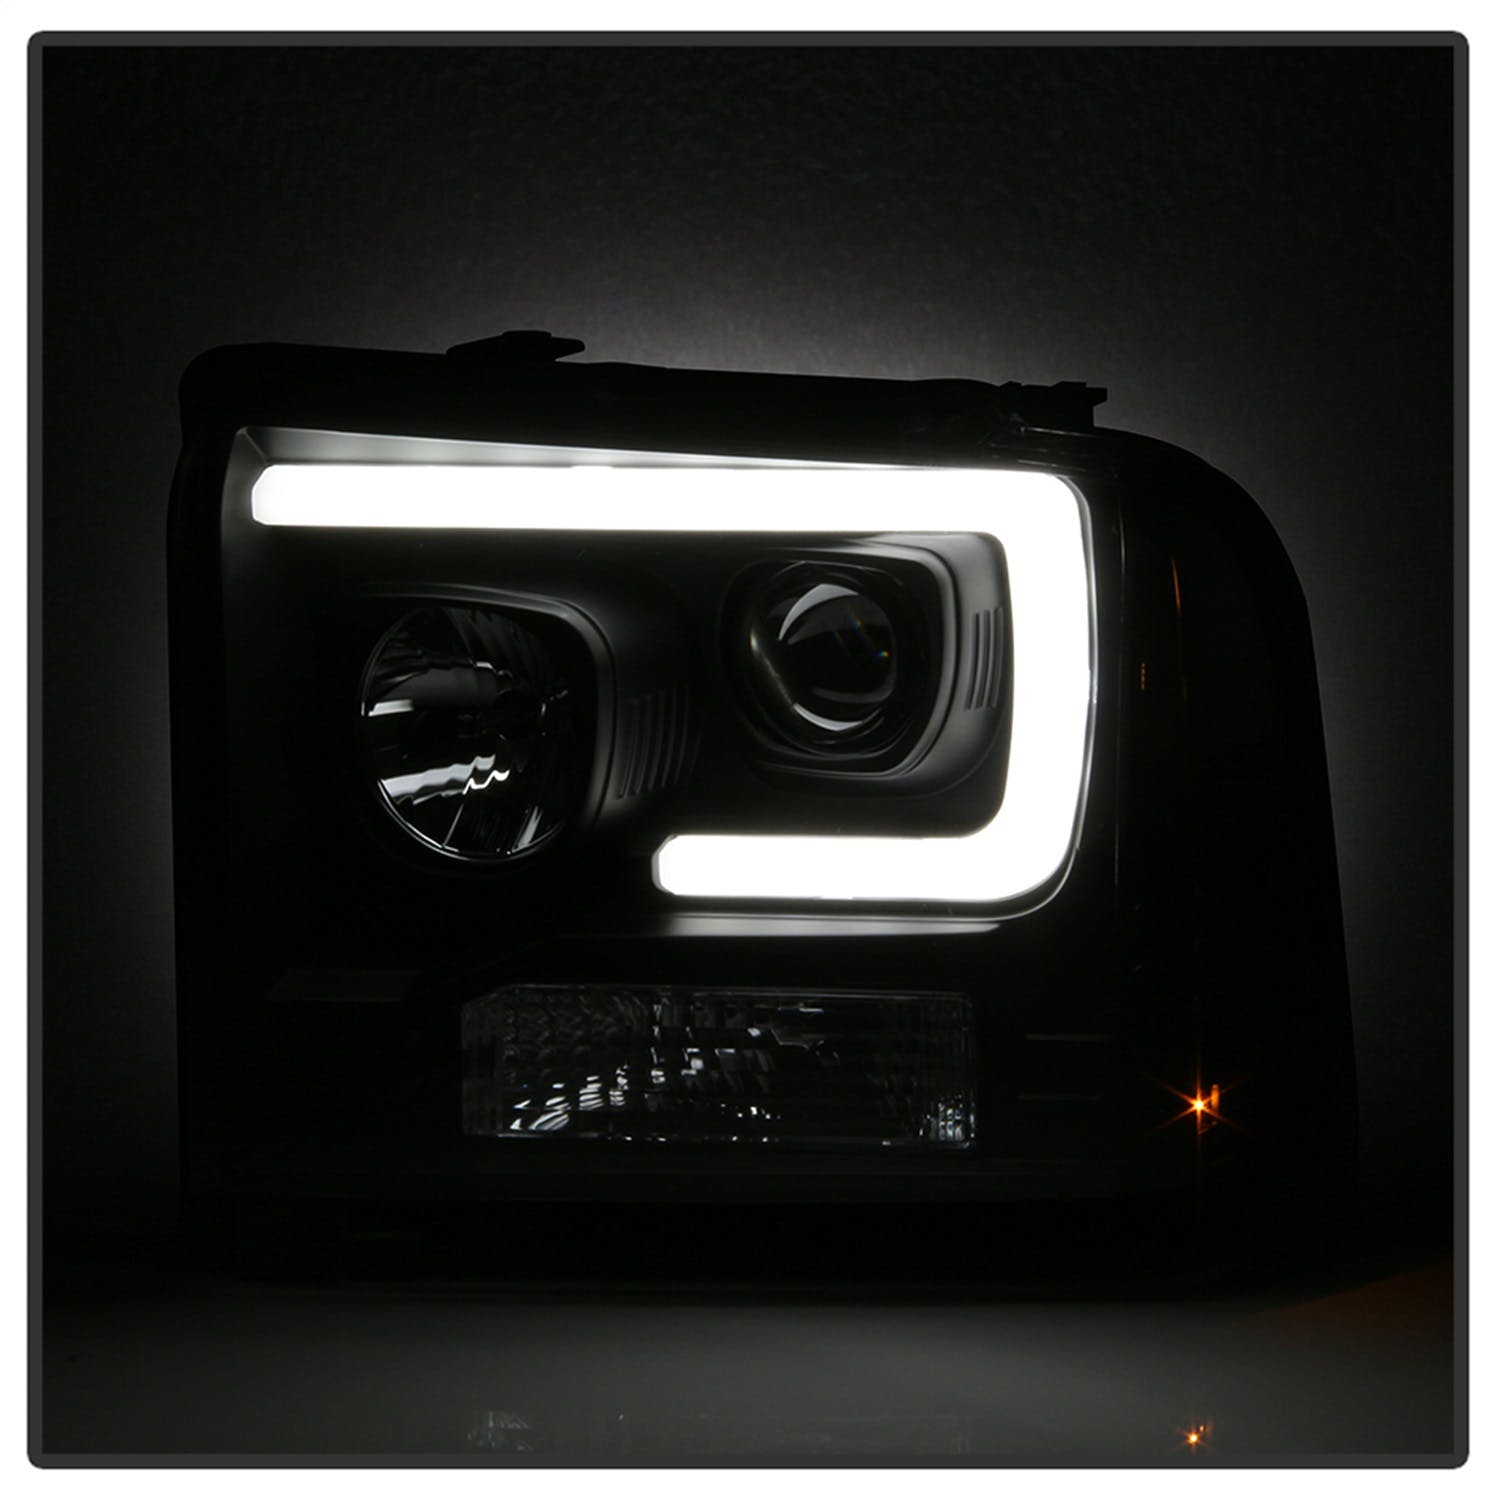 Spyder Auto 5084507 (Spyder) Ford F250/350/450 Super Duty 05-07 Light Bar Projector Headlights-Black